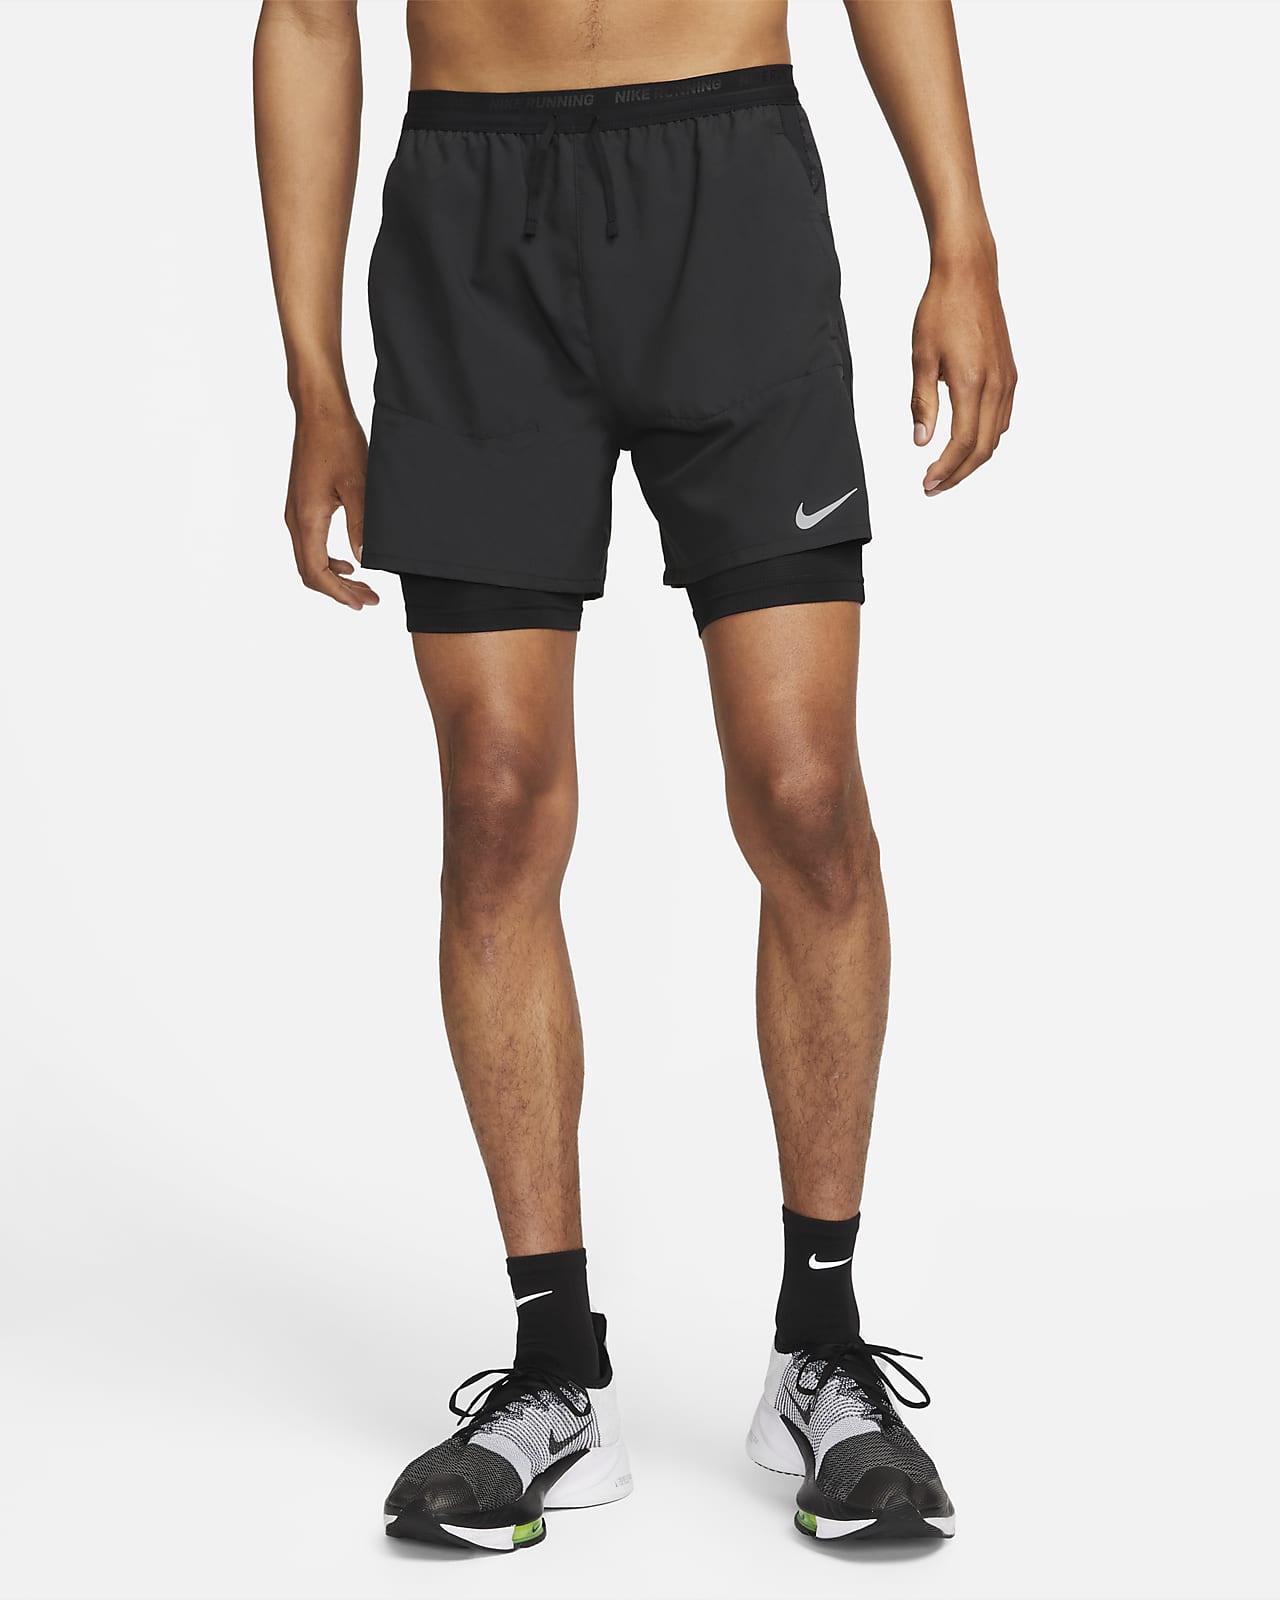 Mainstream bad Mania Nike Dri-FIT Stride Men's 5" 2-in-1 Running Shorts. Nike.com